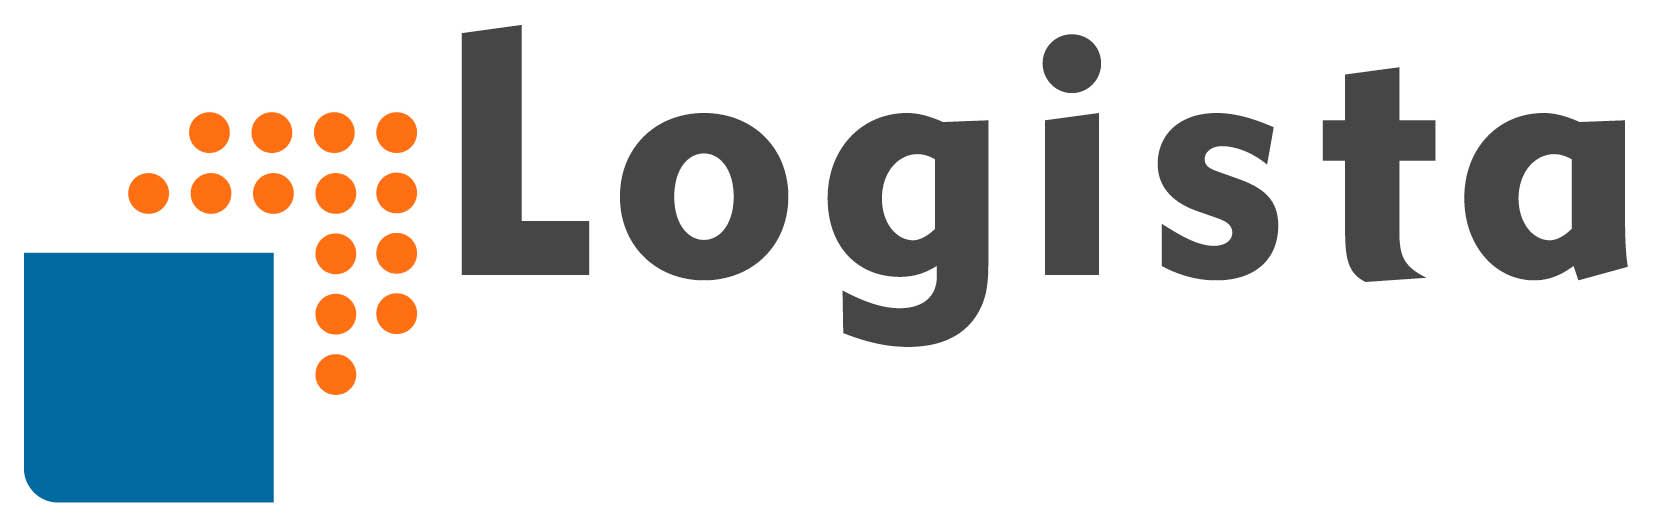 Compania De Distribucion Integral Logista Holdings S.A.